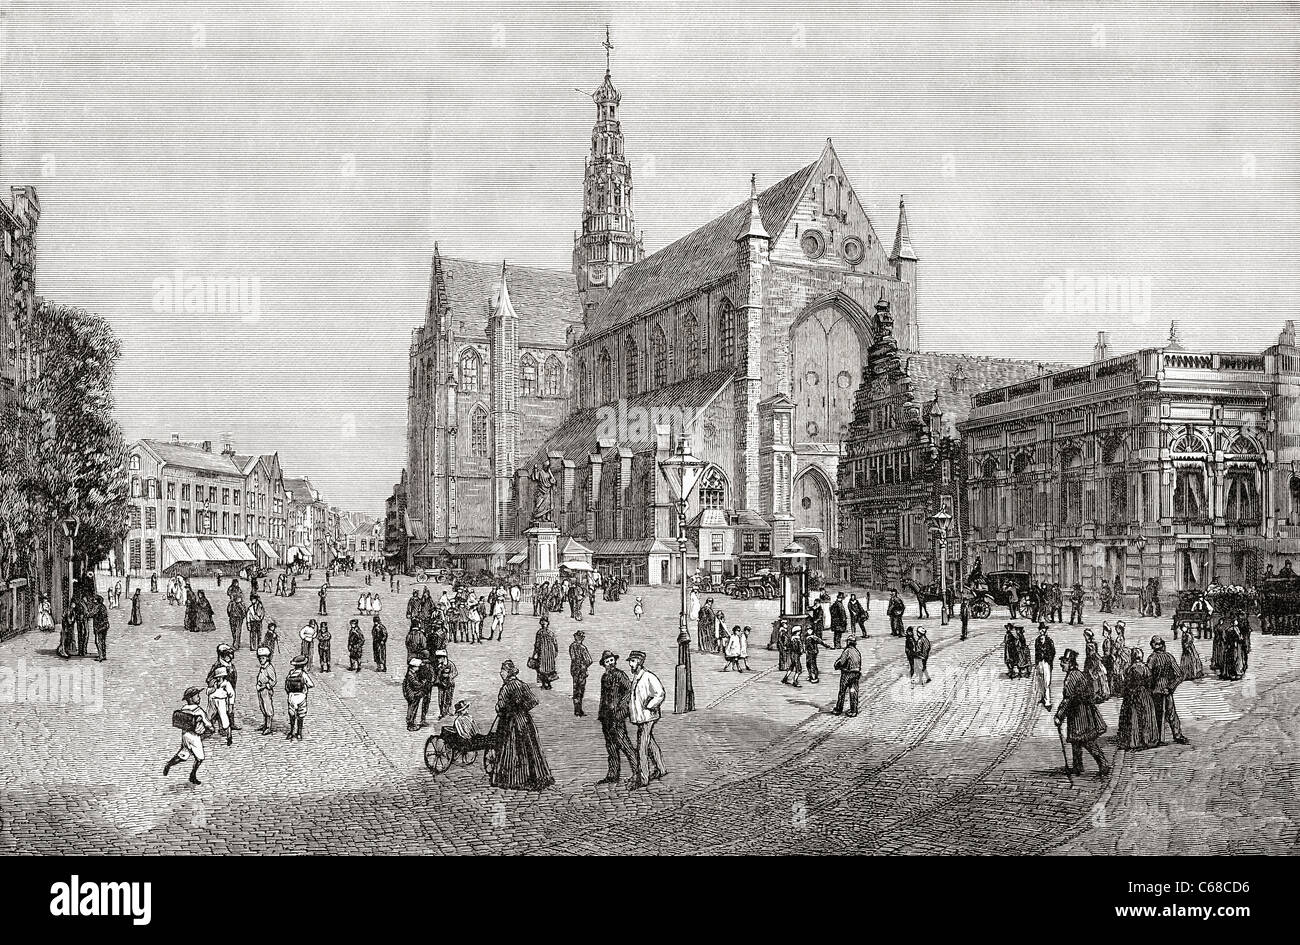 The Grote Kerk or St. Bavokerk in the Grote Markt, Haarlem, the Netherlands in the 19th century. Stock Photo